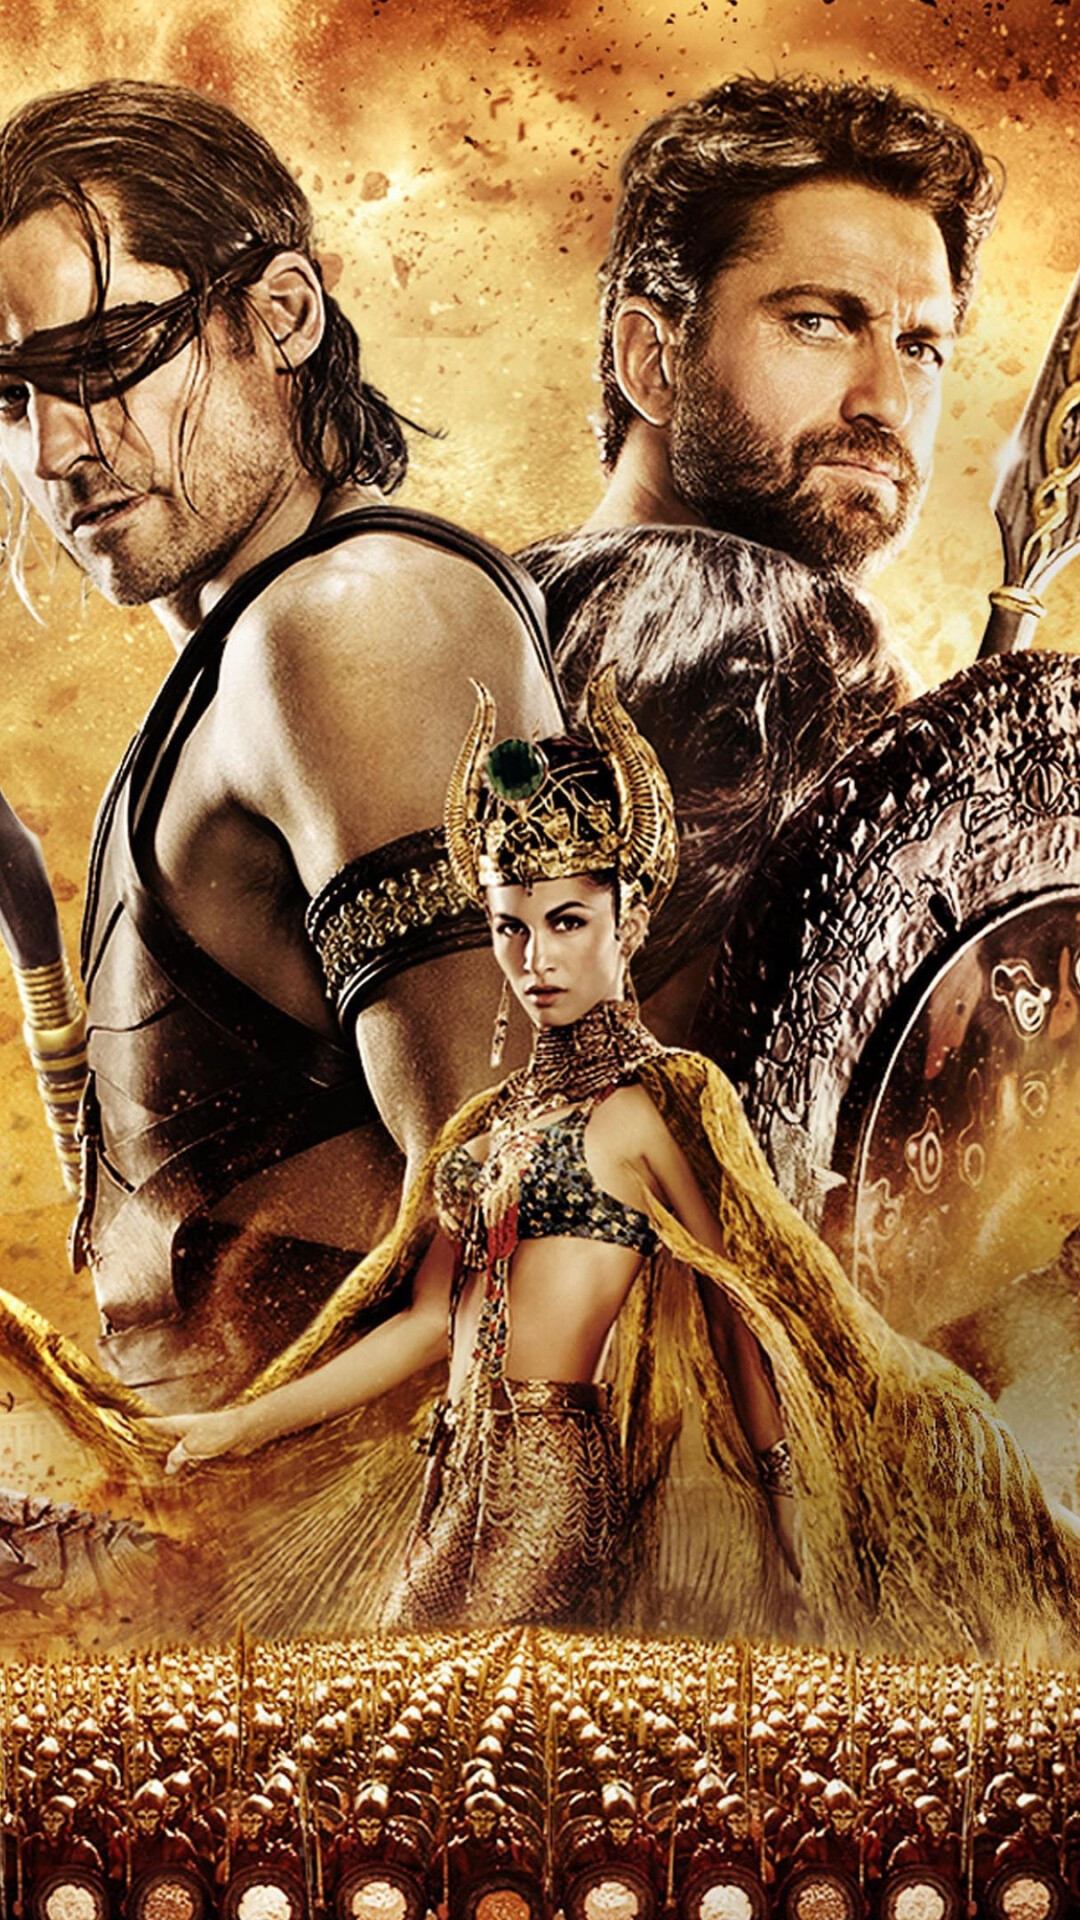 Gods of Egypt (Movie): Elodie Yung as Hathor, Nikolaj Coster-Waldau as Horus, Gerard Butler as Set. 1080x1920 Full HD Wallpaper.